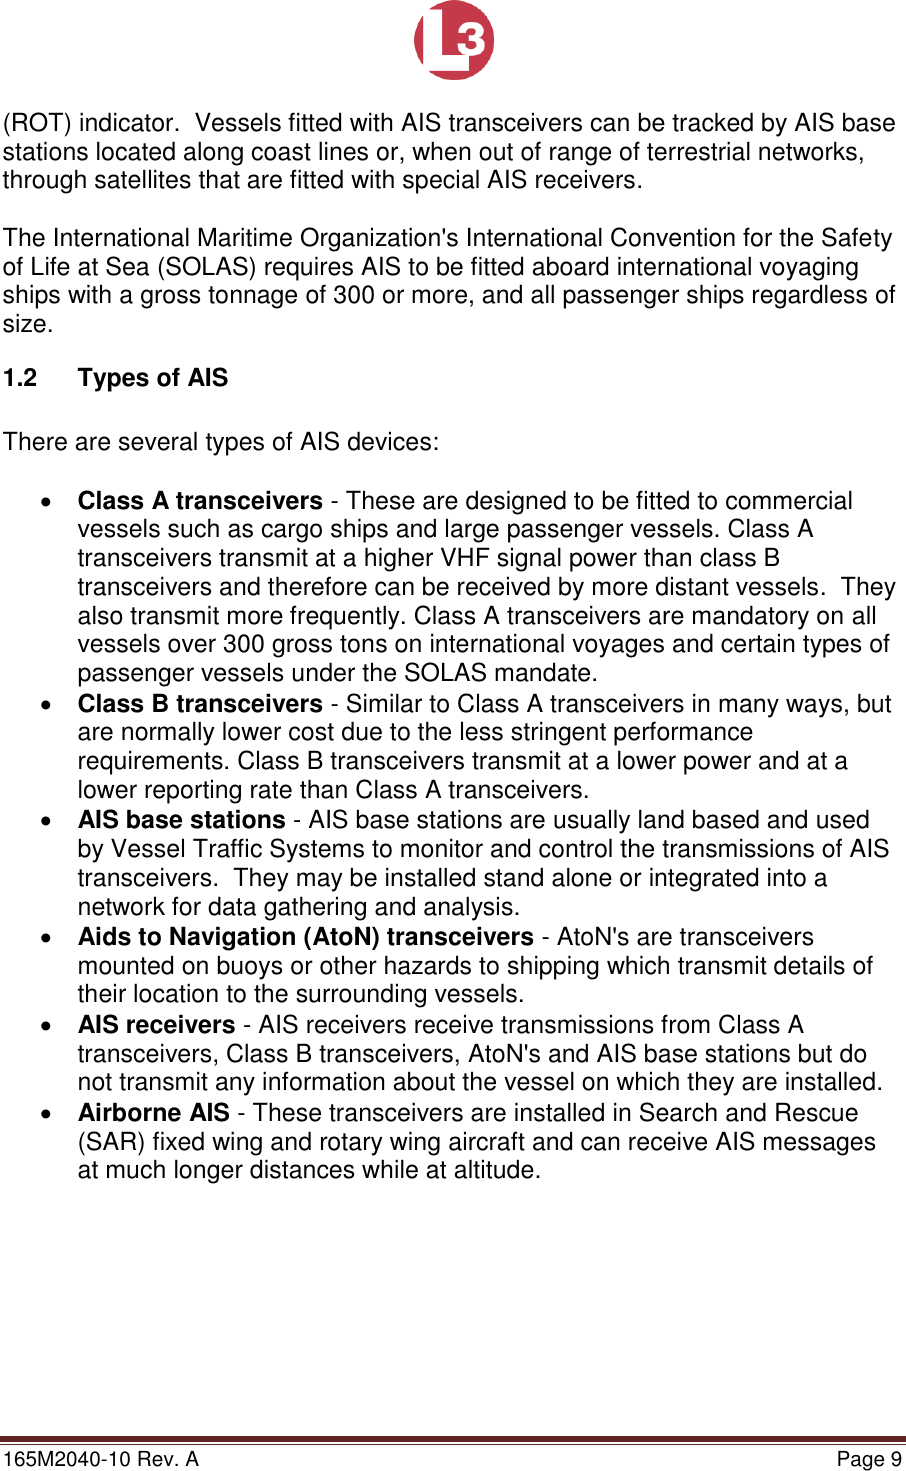 Page 9 of L3 Technologies AISA6 Shipboard Mobile AIS User Manual Memory Verification Procedure